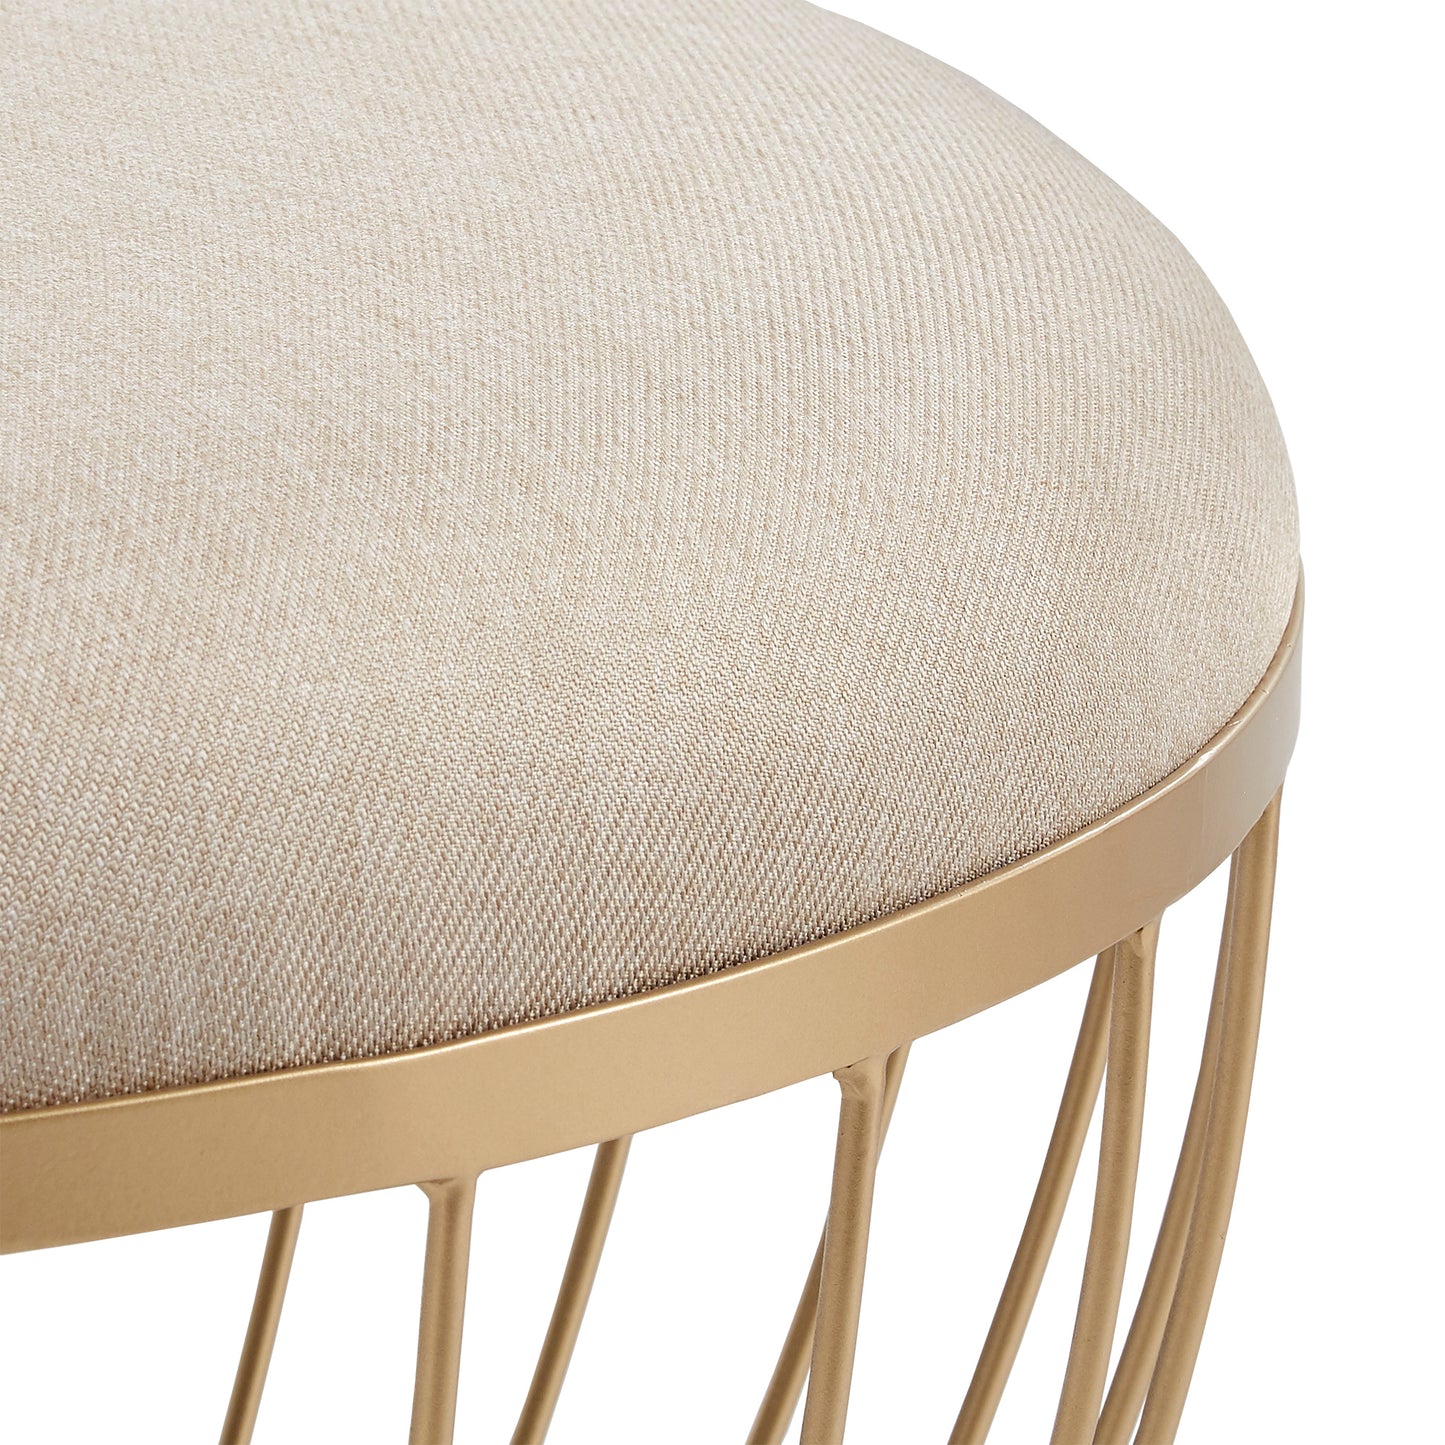 Fabric Upholstered Round Ottoman - Beige Linen